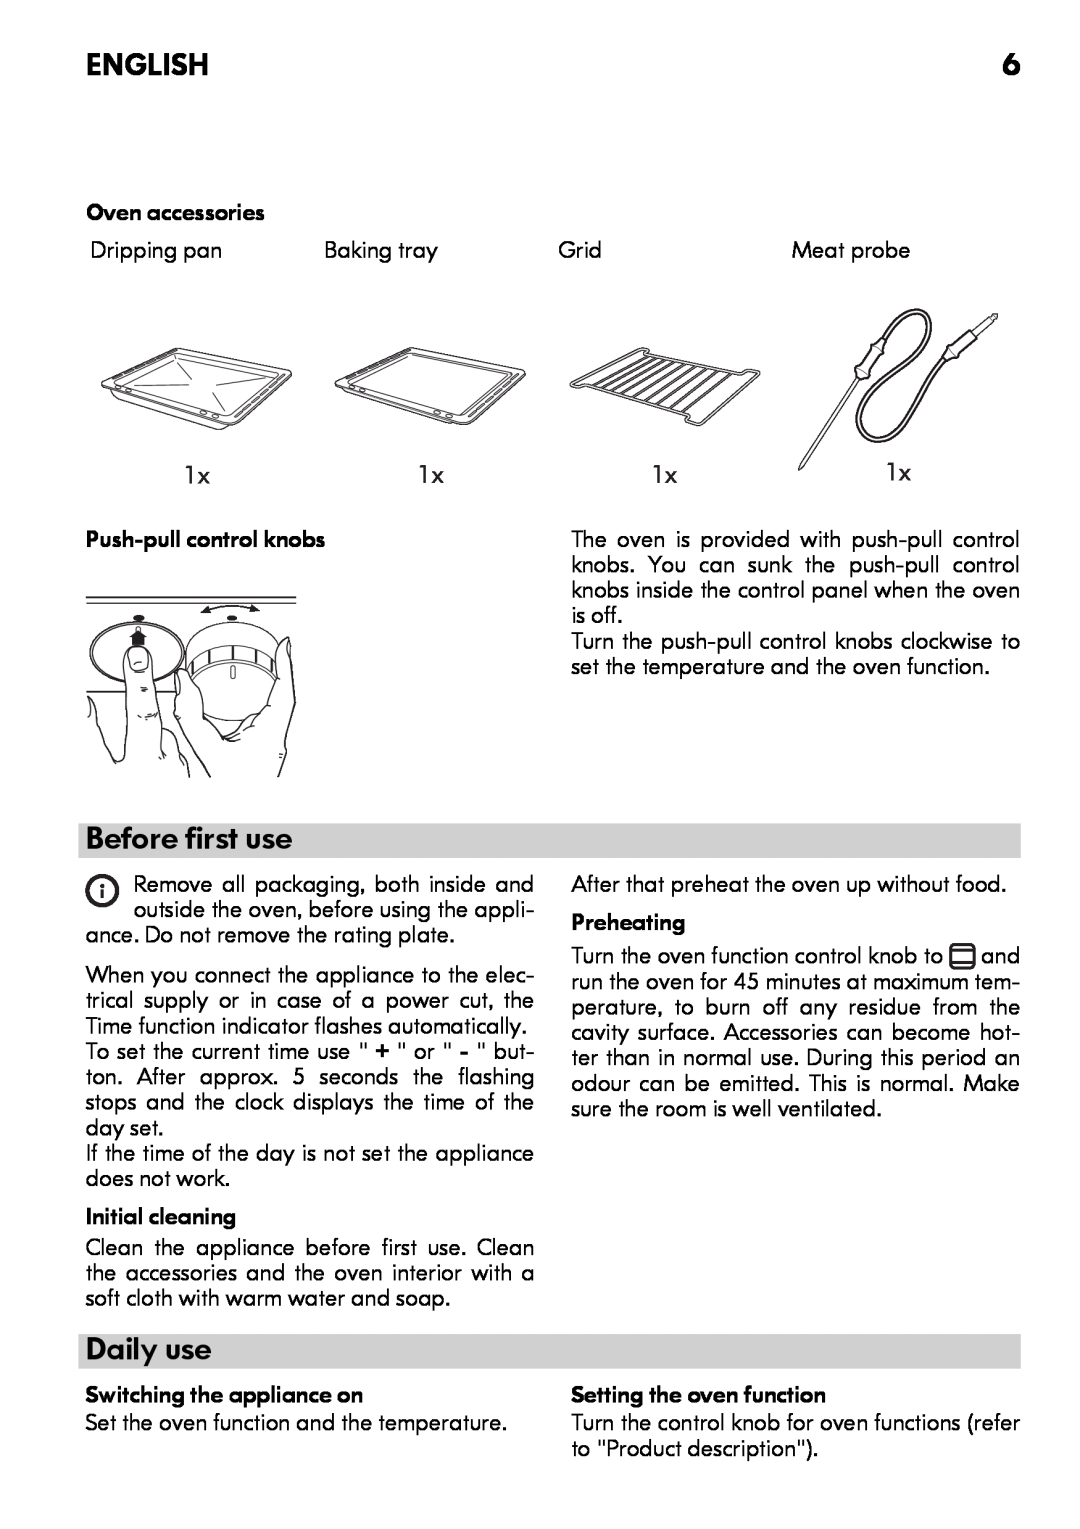 IKEA OV9 manual Before first use, Daily use, English 